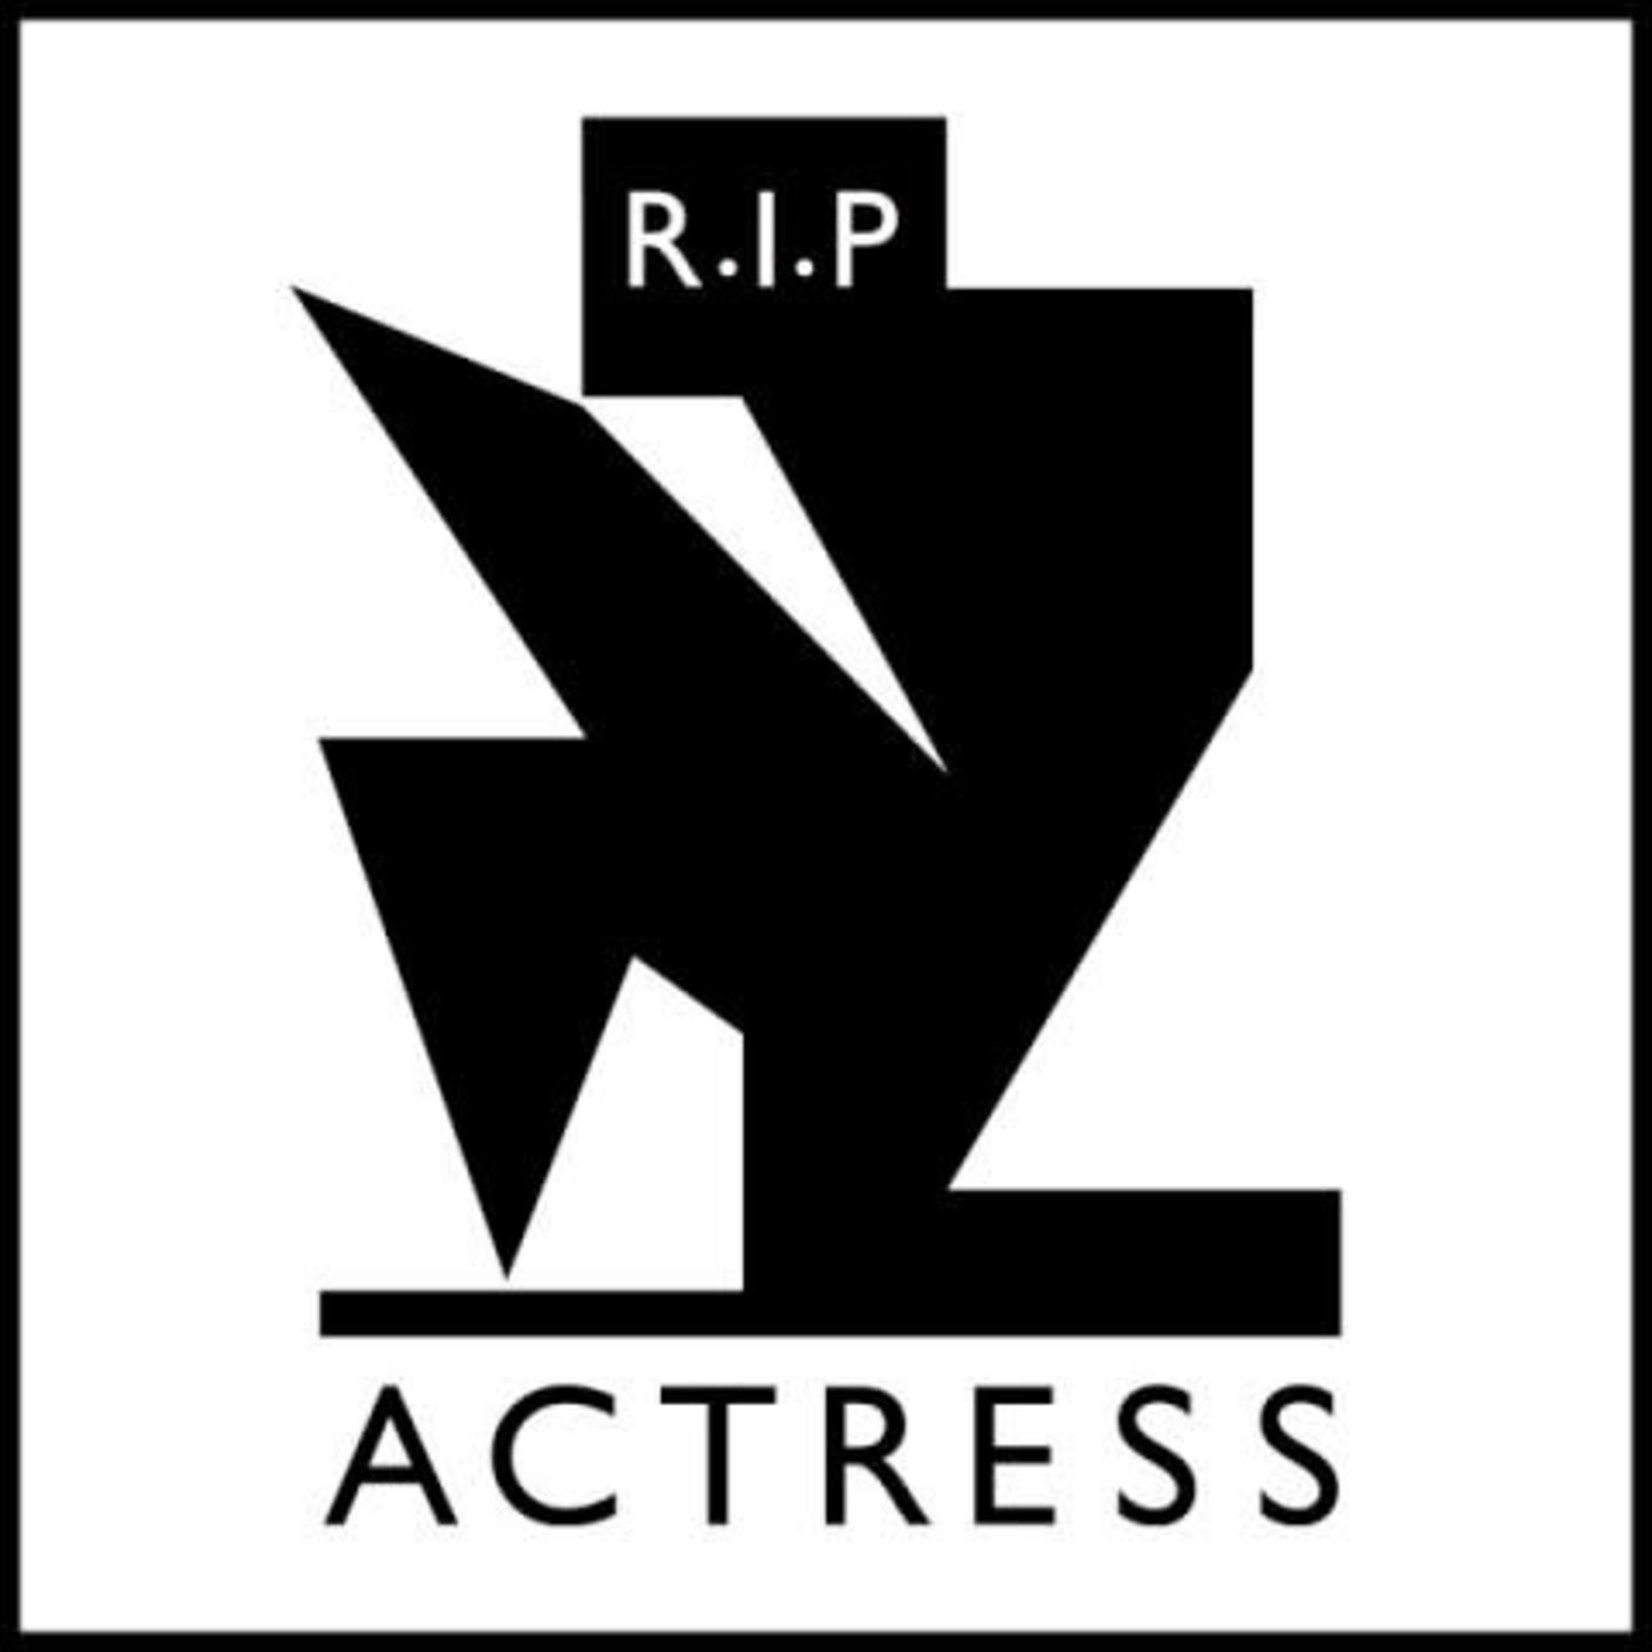 [New] Actress - R.I.P. (2LP)